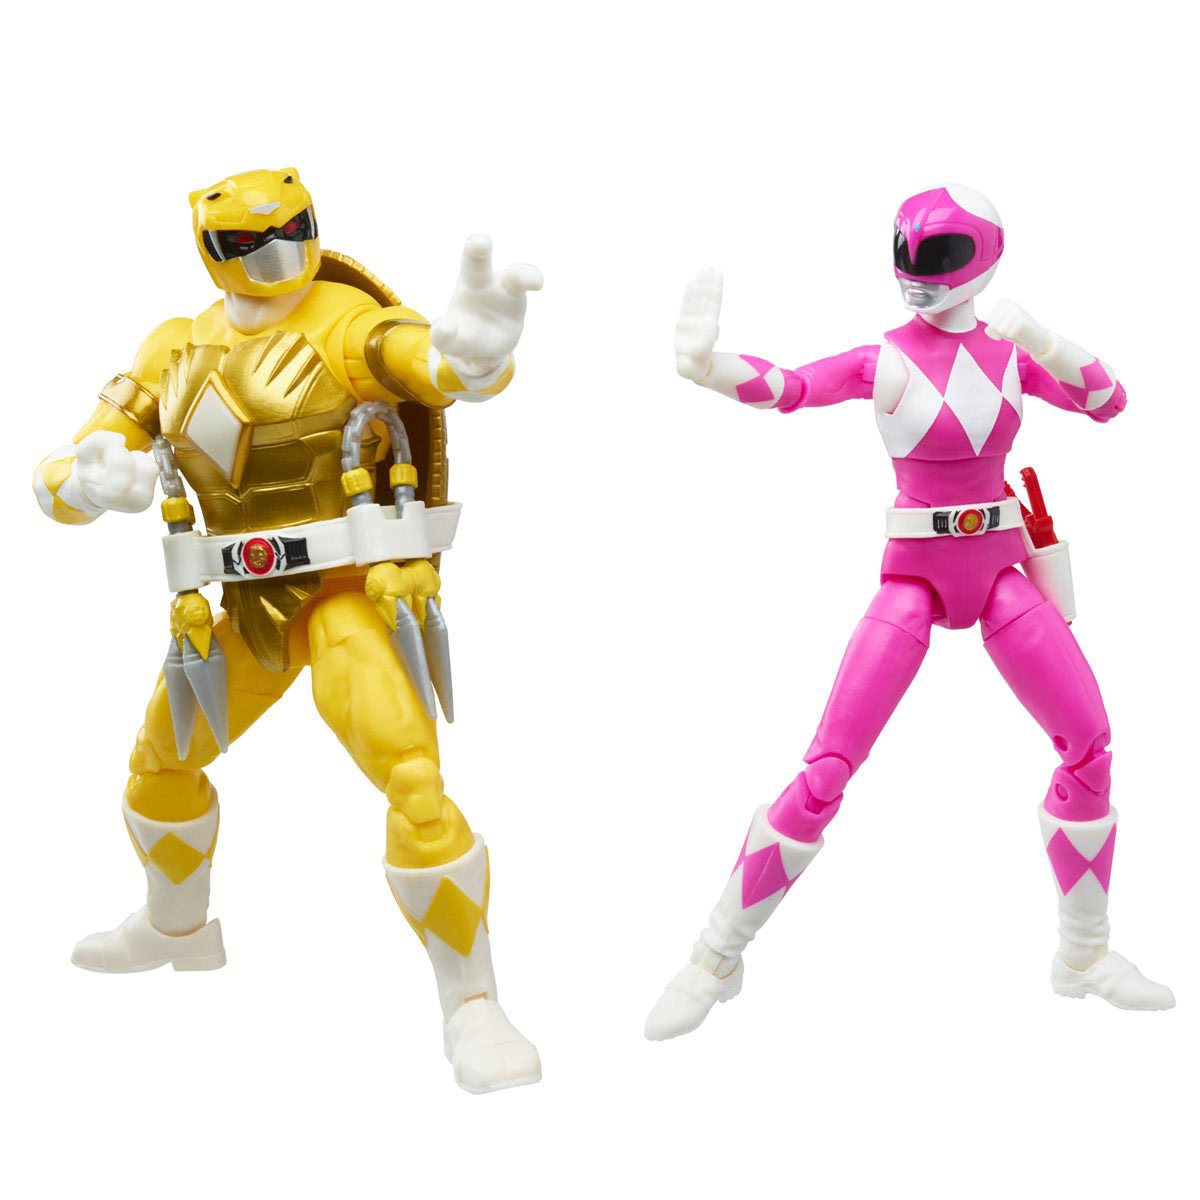 Power Rangers X Teenage Mutant Ninja Turtles: Lightning Collection - Michelangelo Yellow and April Pink Action Figures